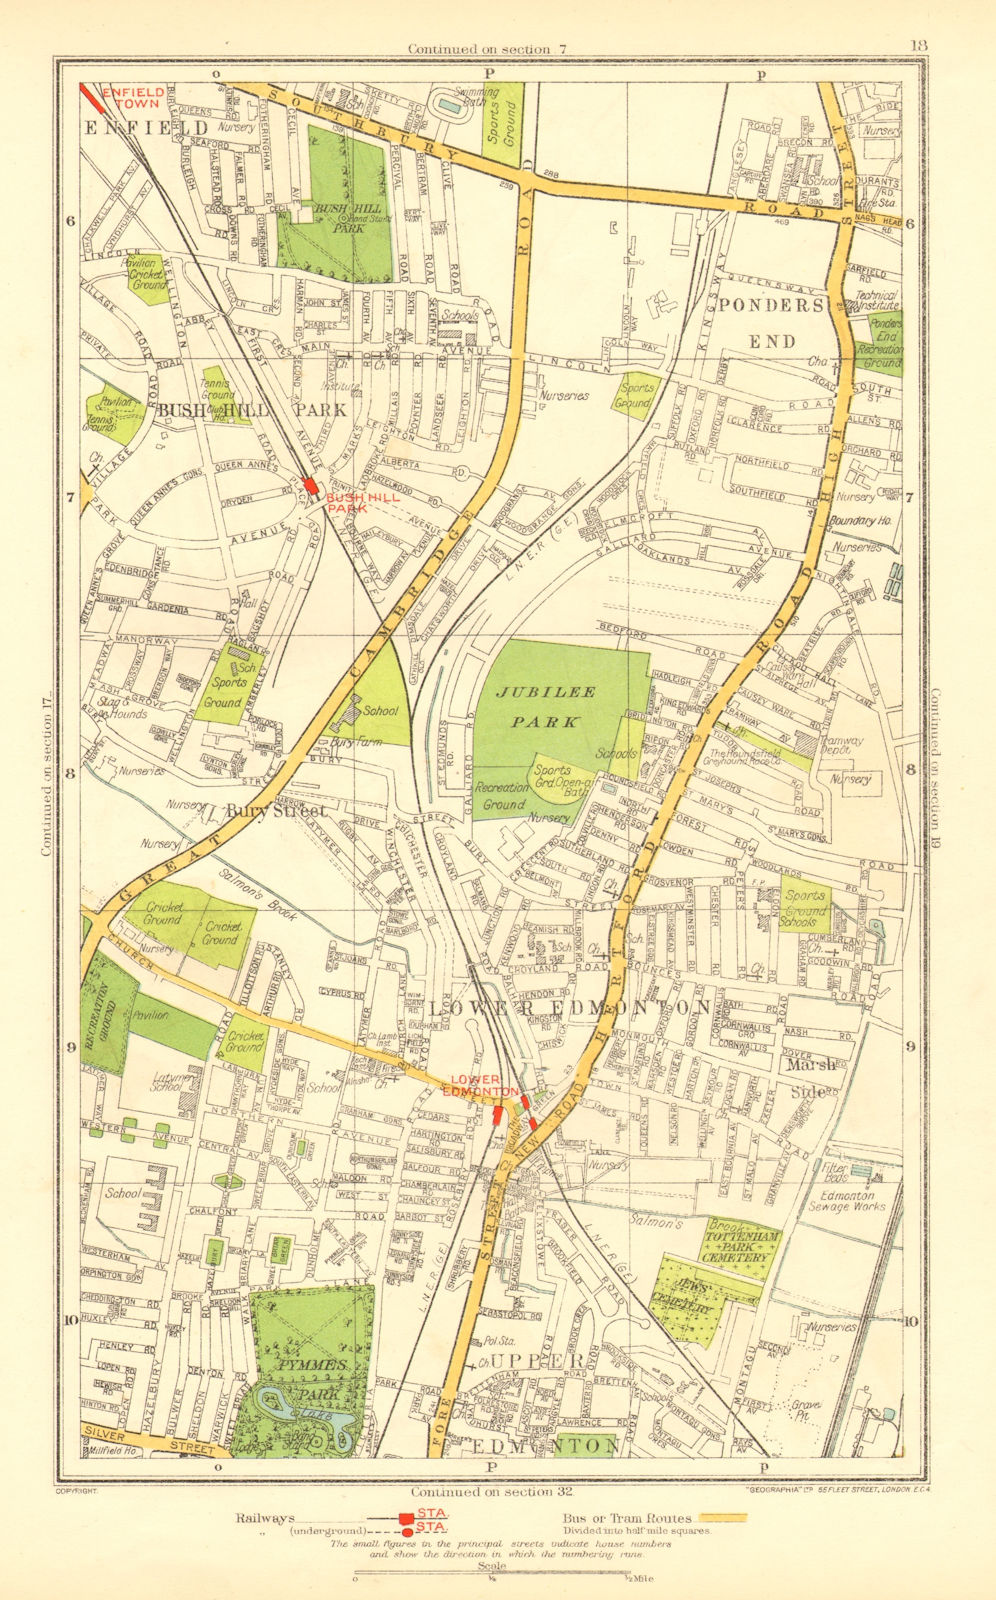 EDMONTON. Bush Hill Park Ponders End Enfield Town Bury Street 1937 old map